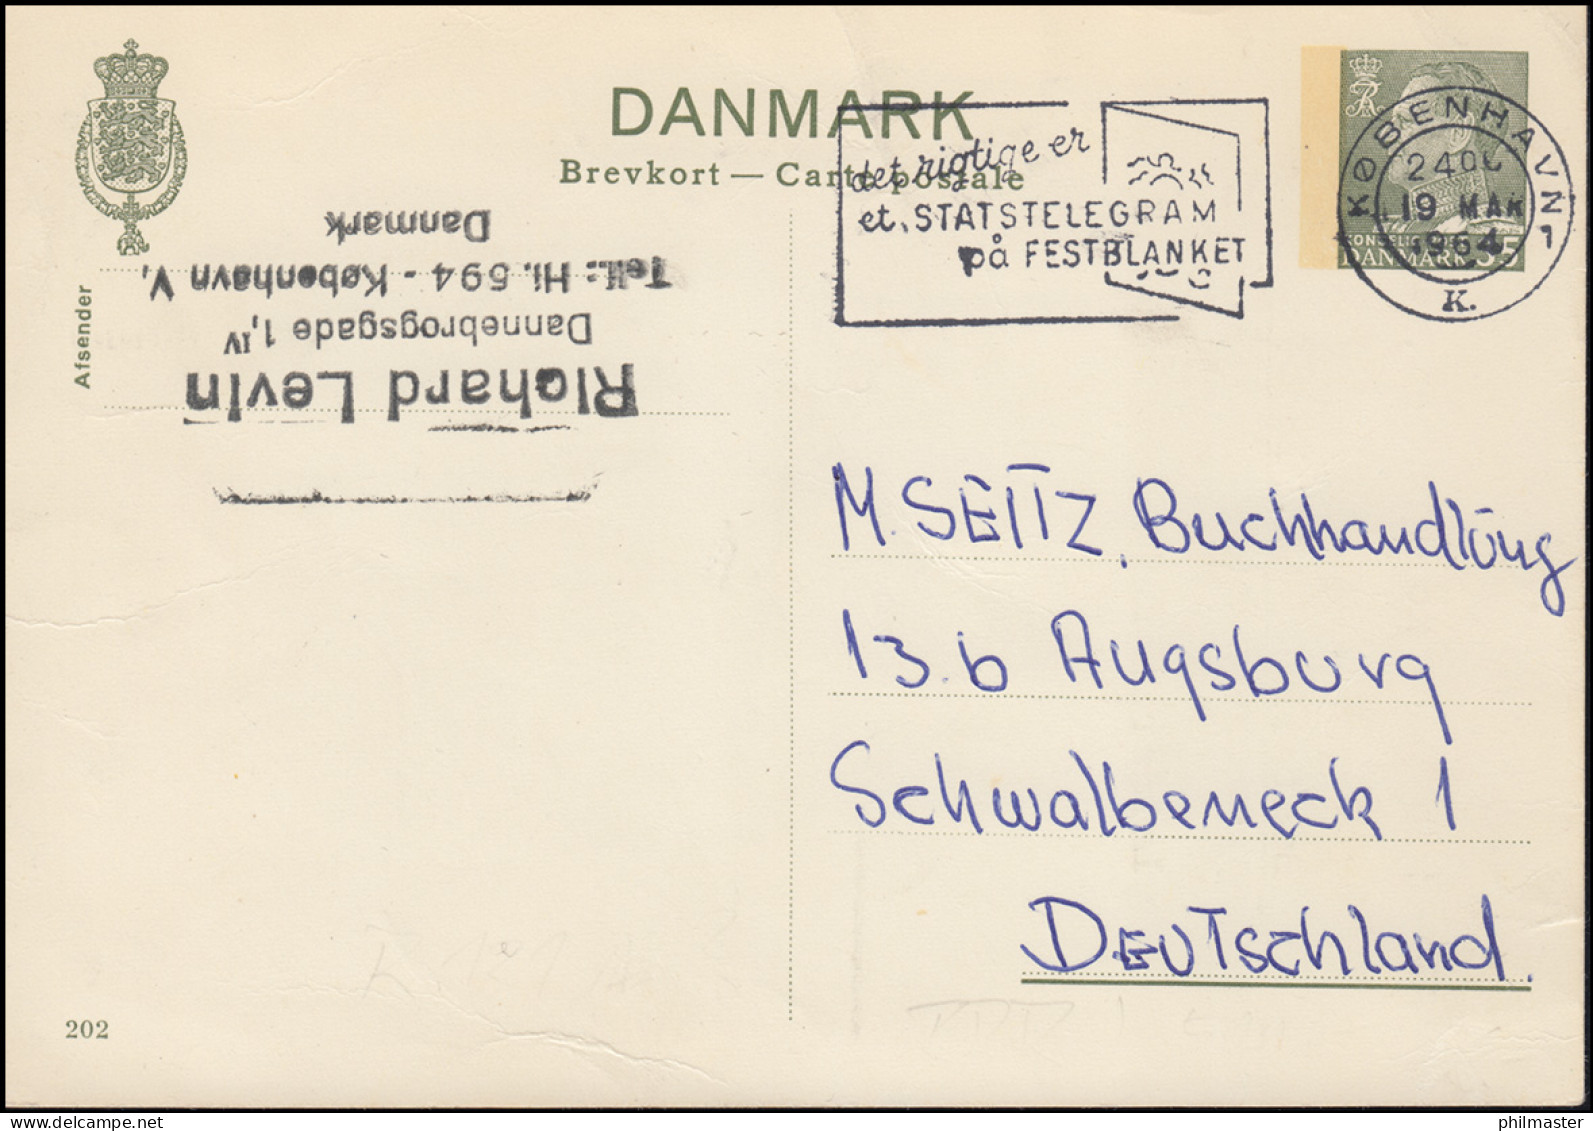 Dänemark Postkarte P 250 Frederik IX. 25 Öre, Kz. 202, KJOBENHAVN 19.3.1964 - Entiers Postaux